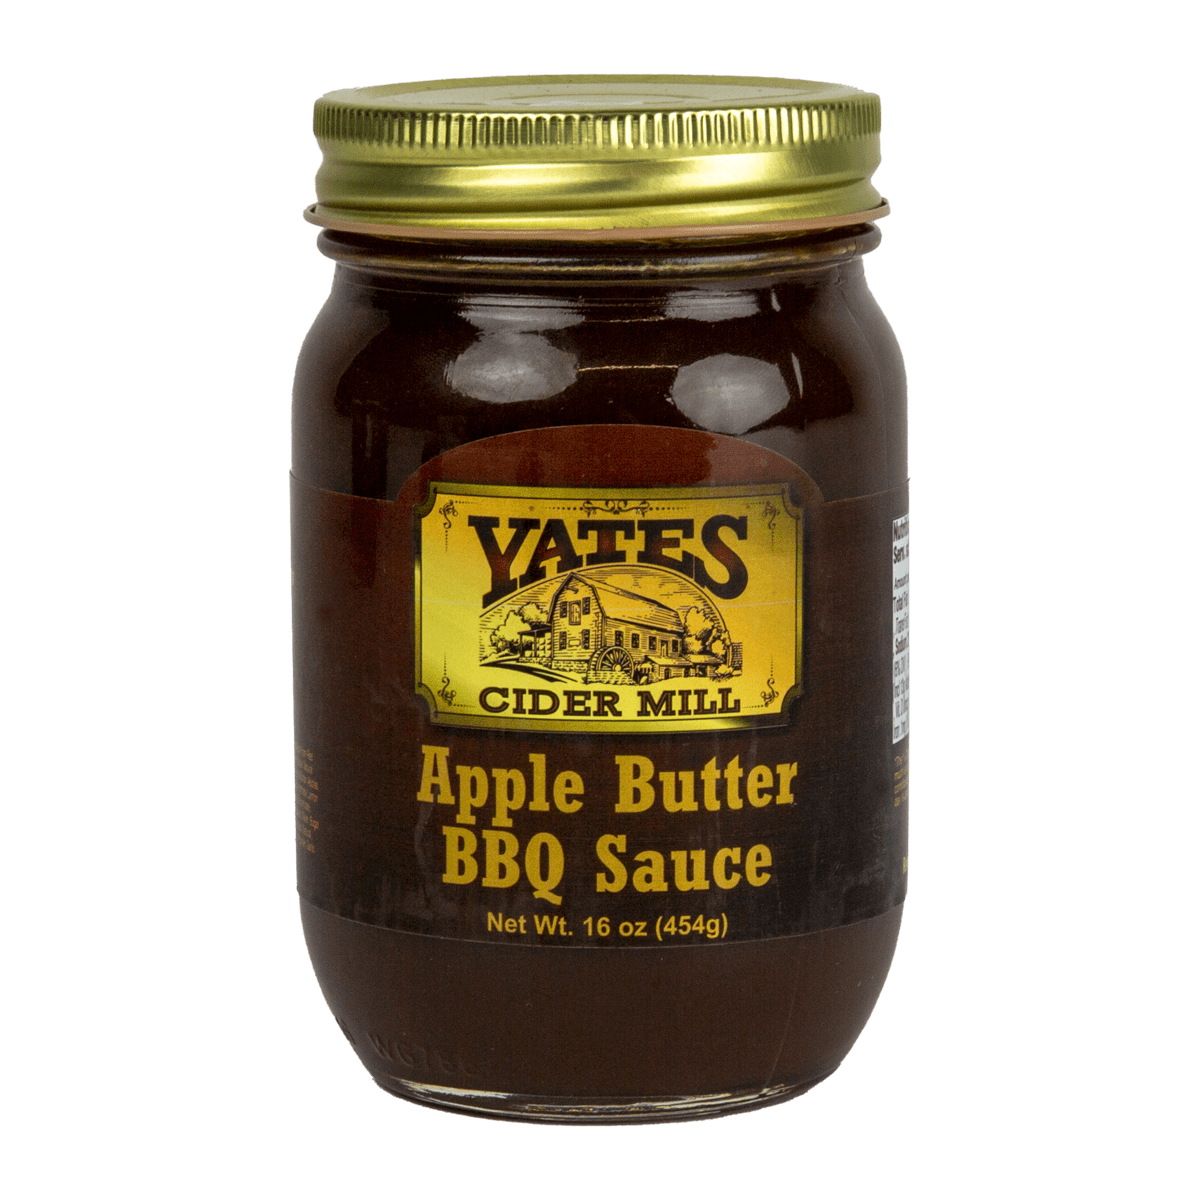 Apple Butter BBQ Sauce Seaquist Orchards